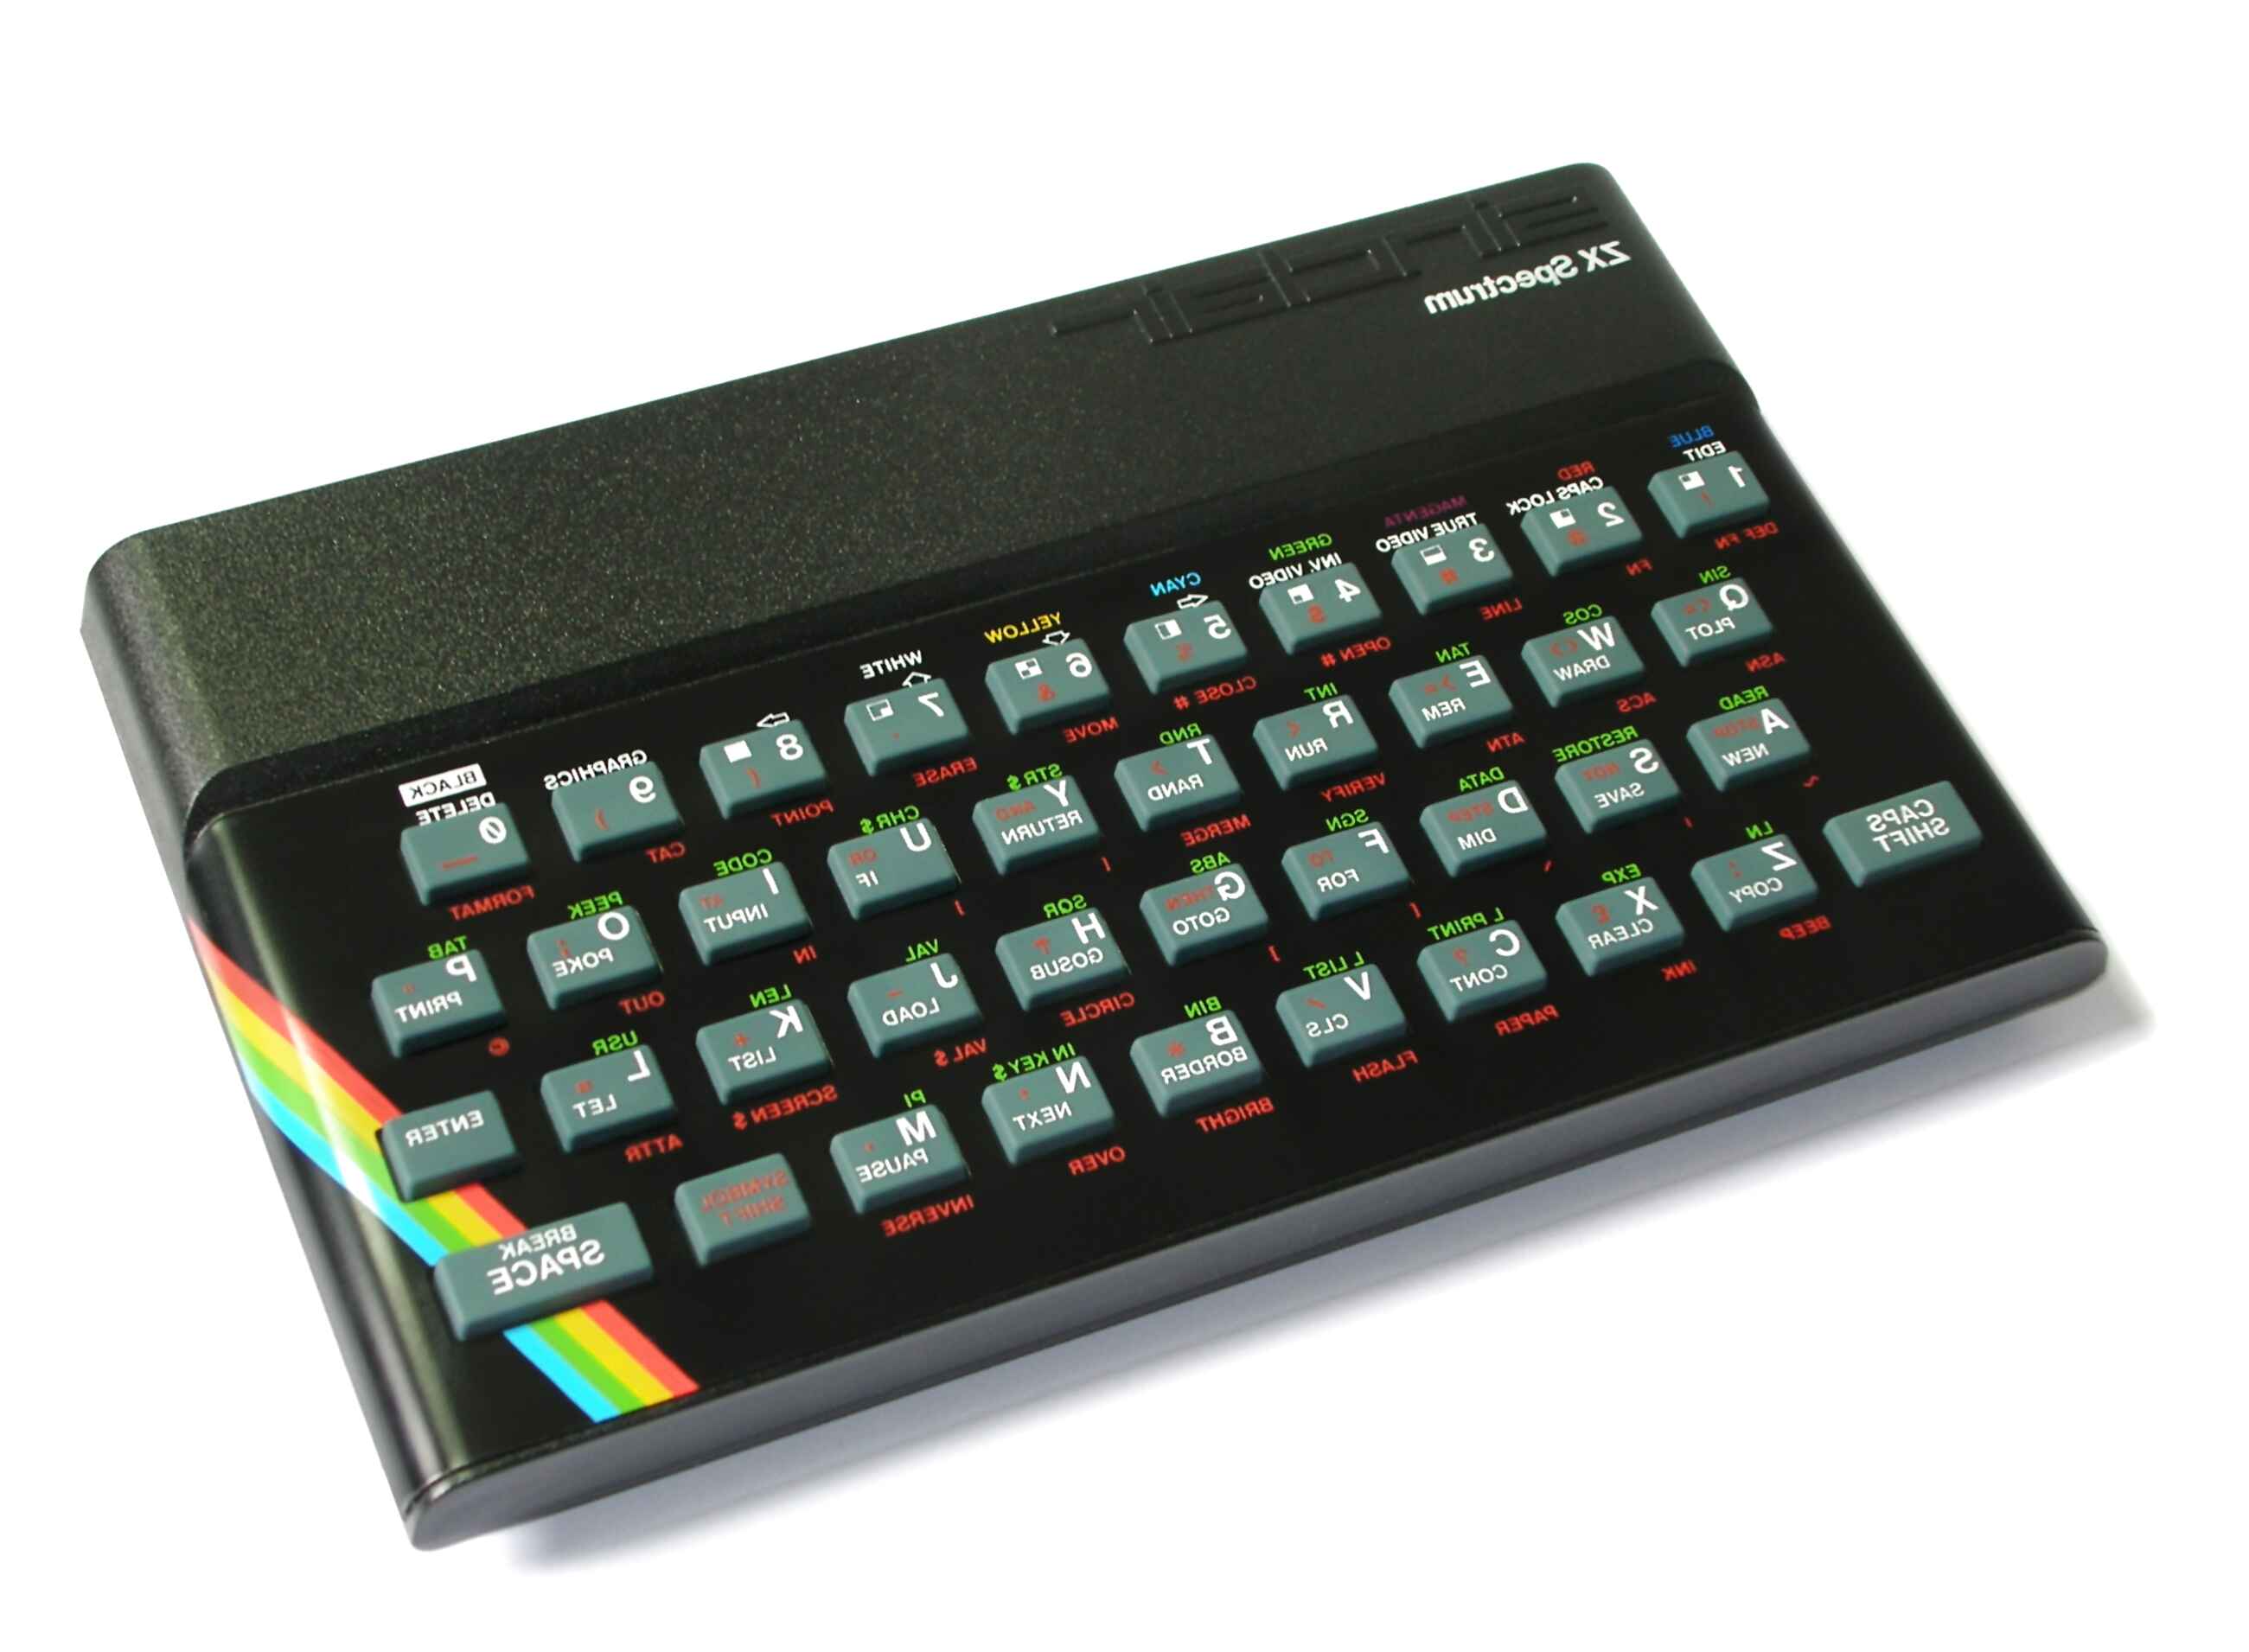 Zx Spectrum Plus for sale in UK | 55 used Zx Spectrum Plus